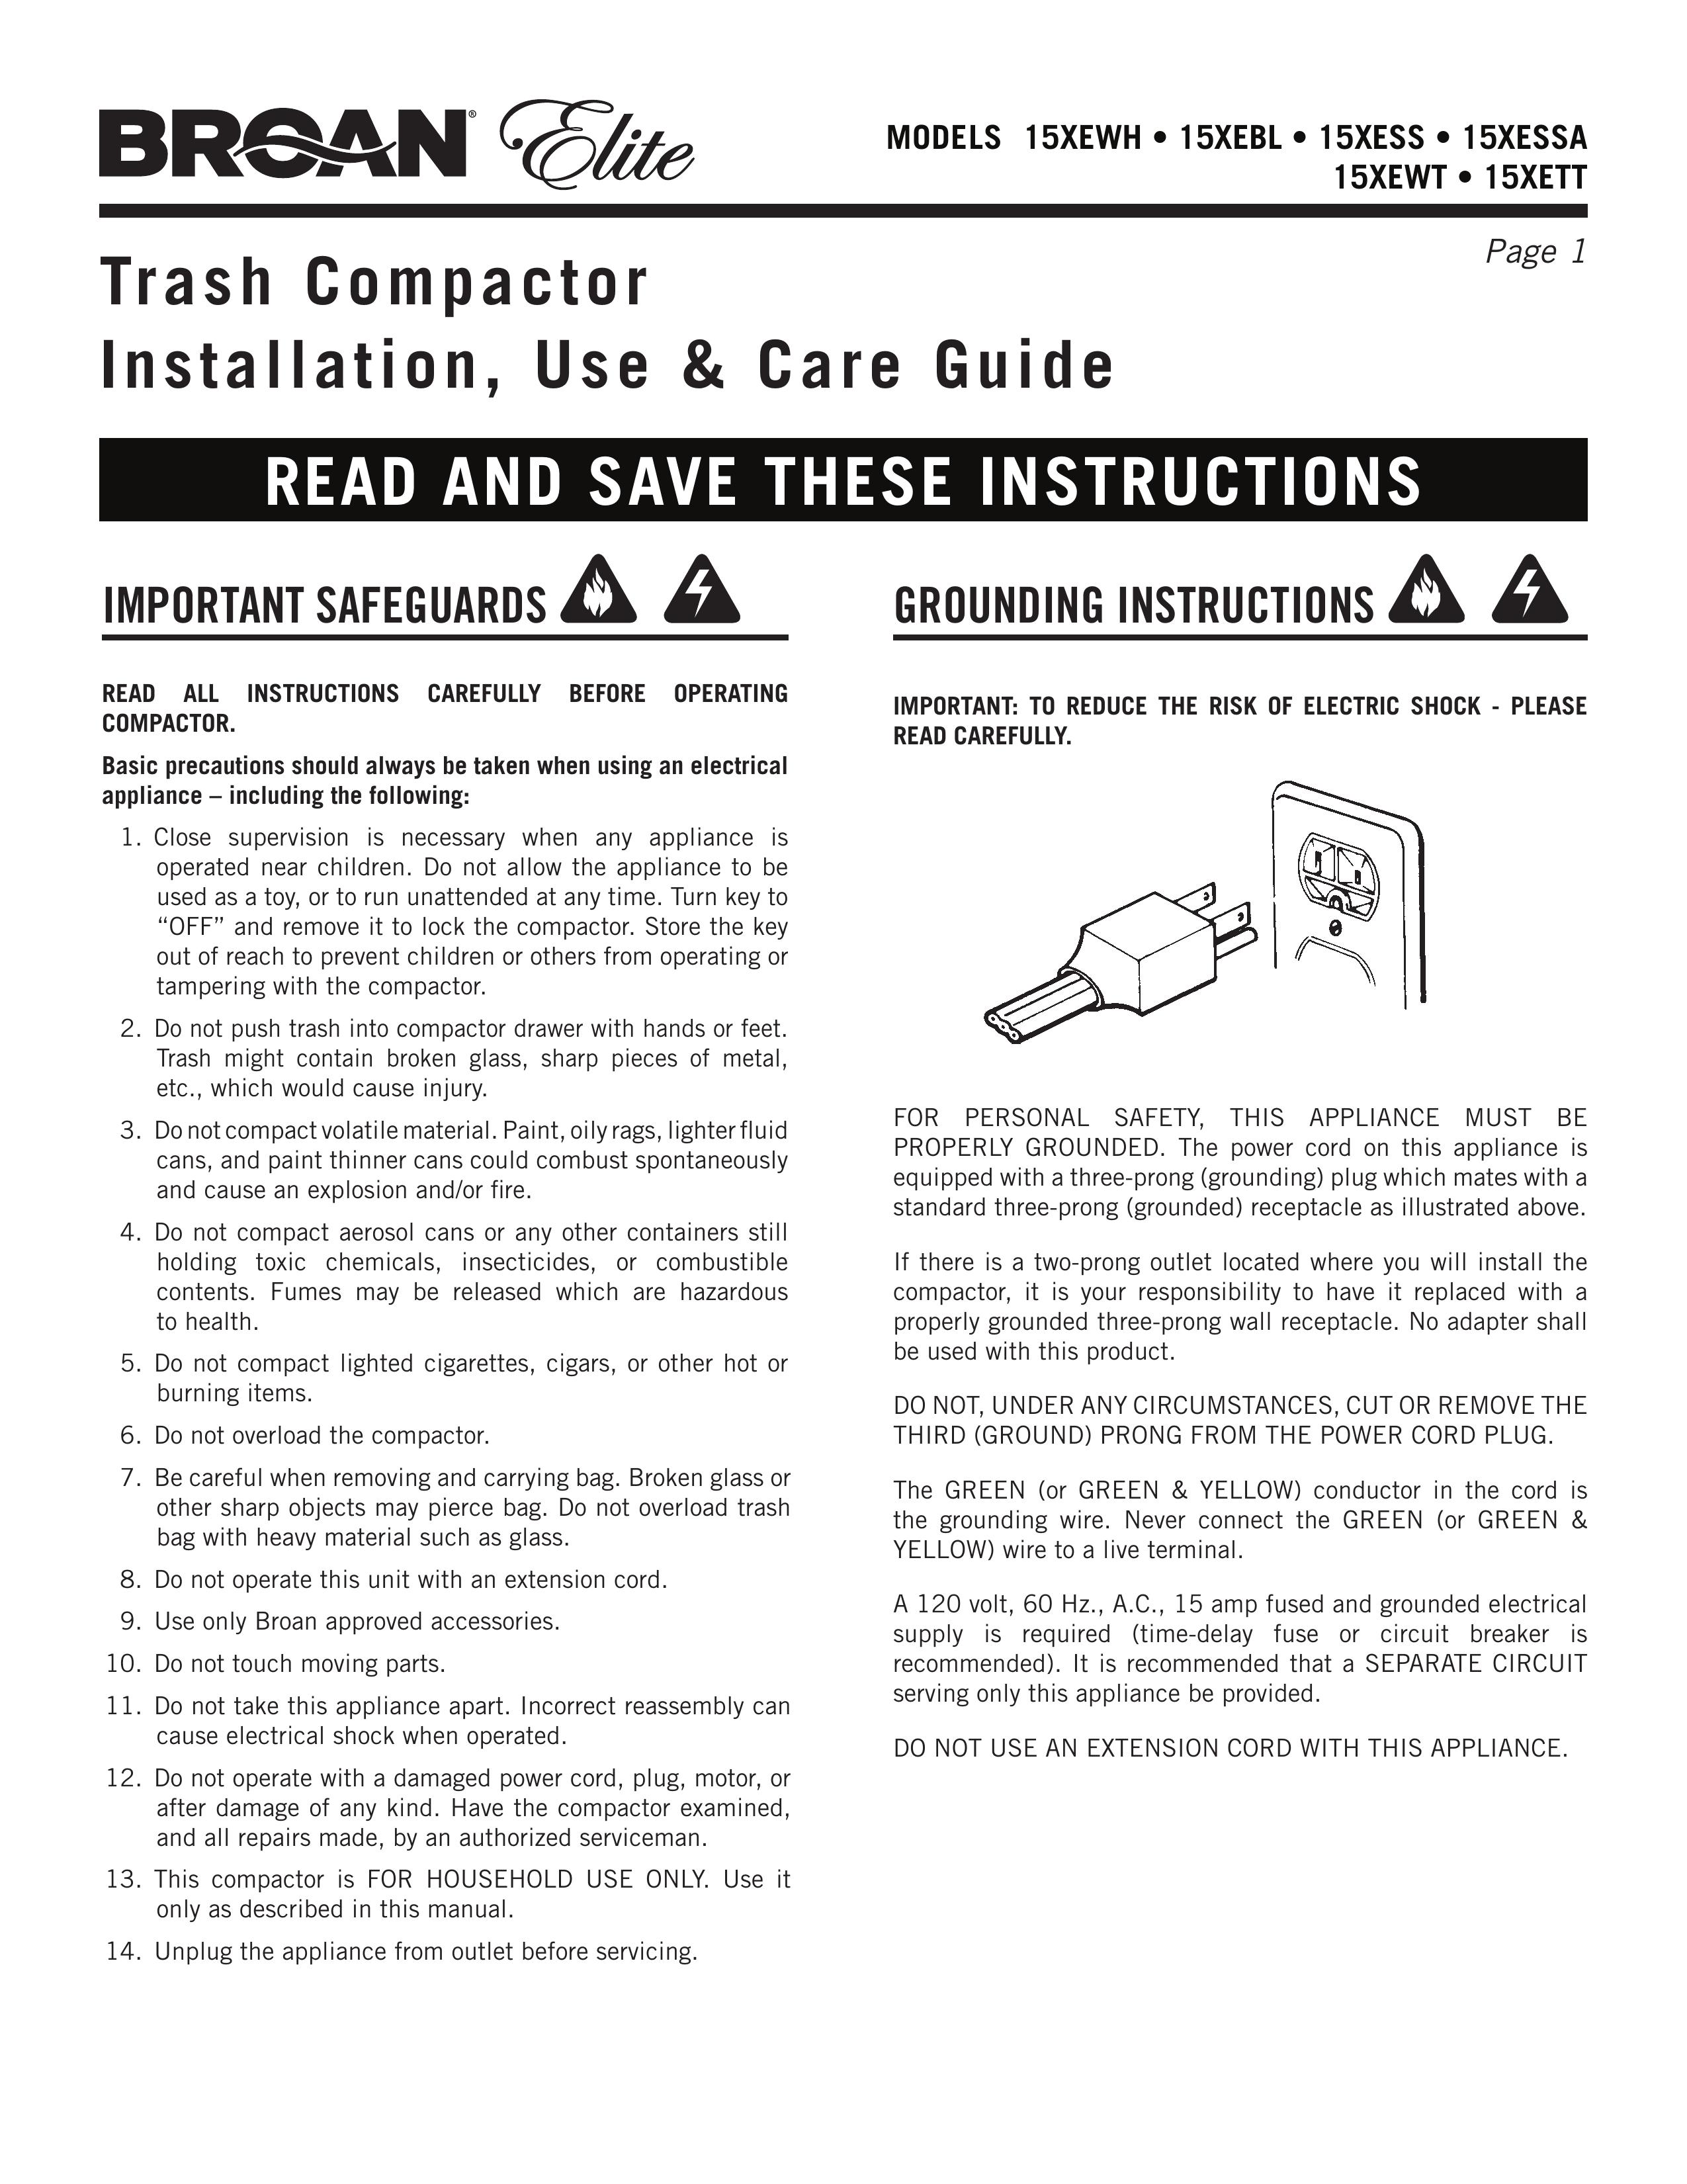 Broan 15Xess Trash Compactor User Manual